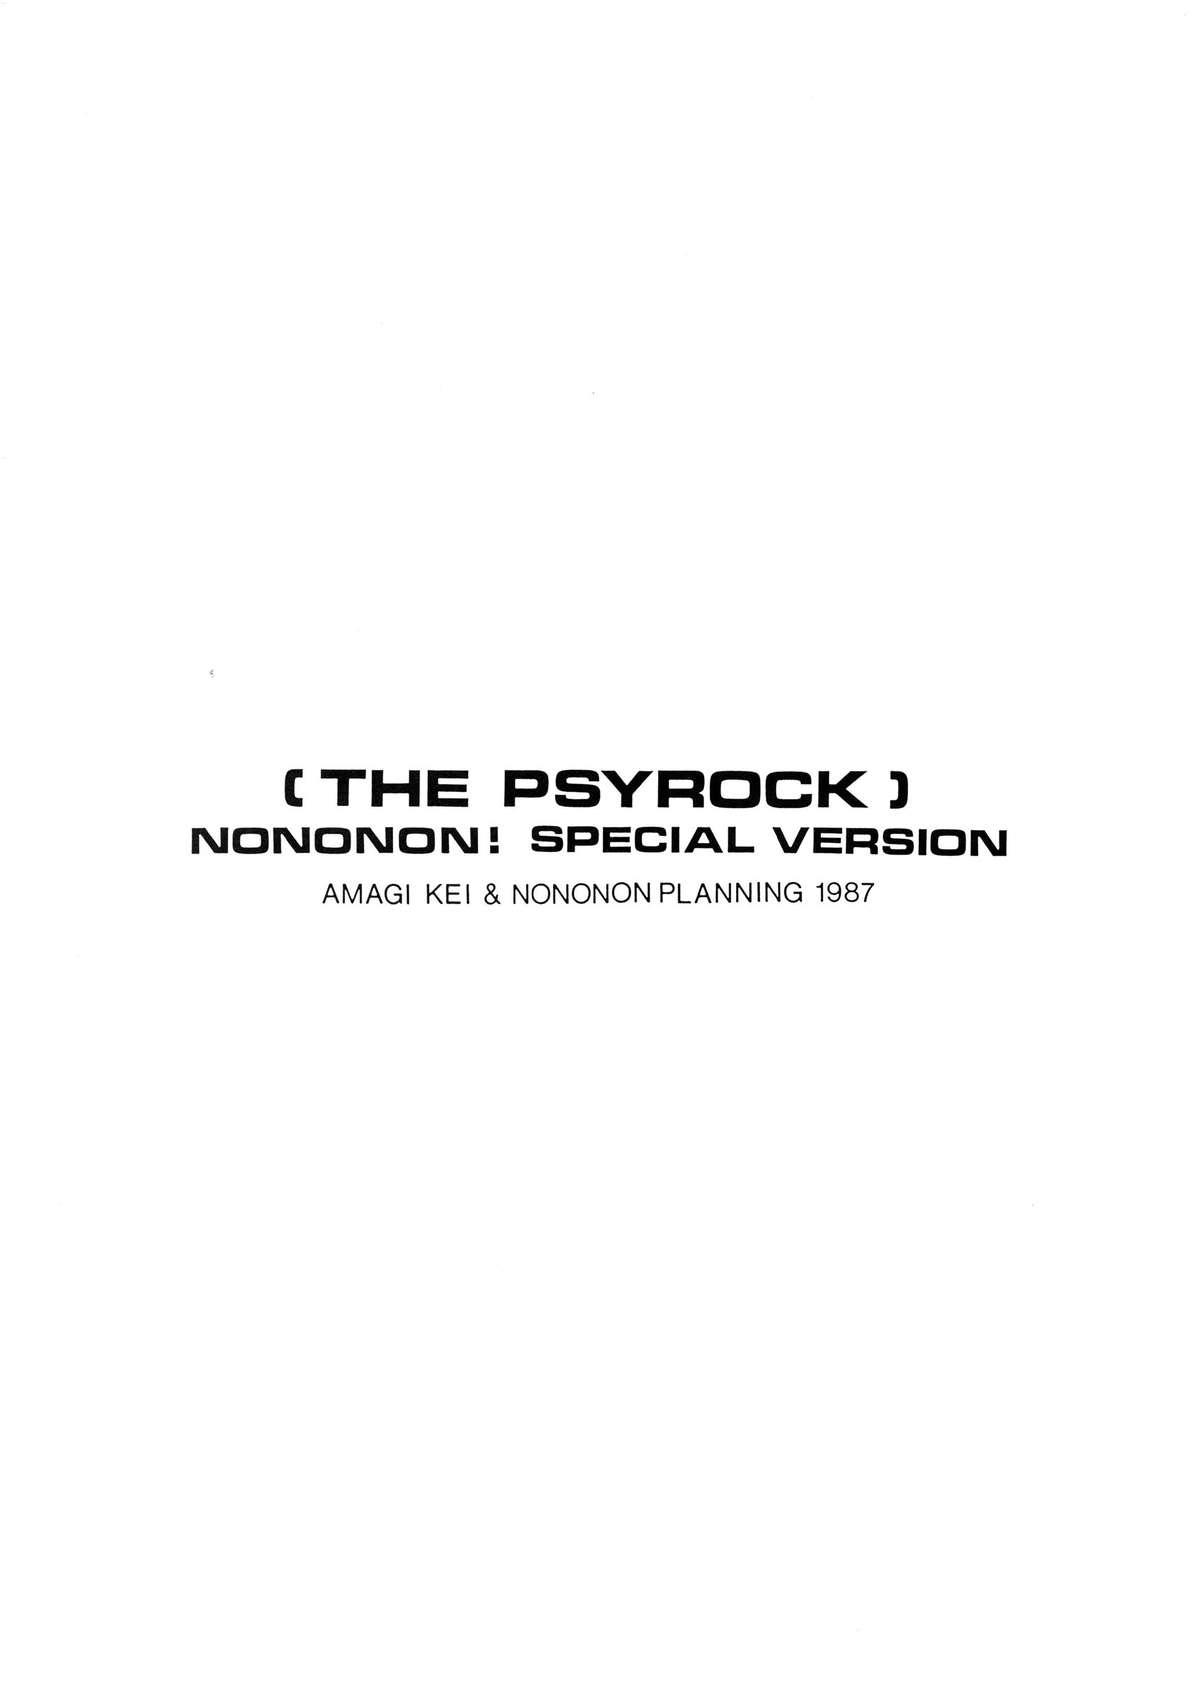 The Psyrock 2